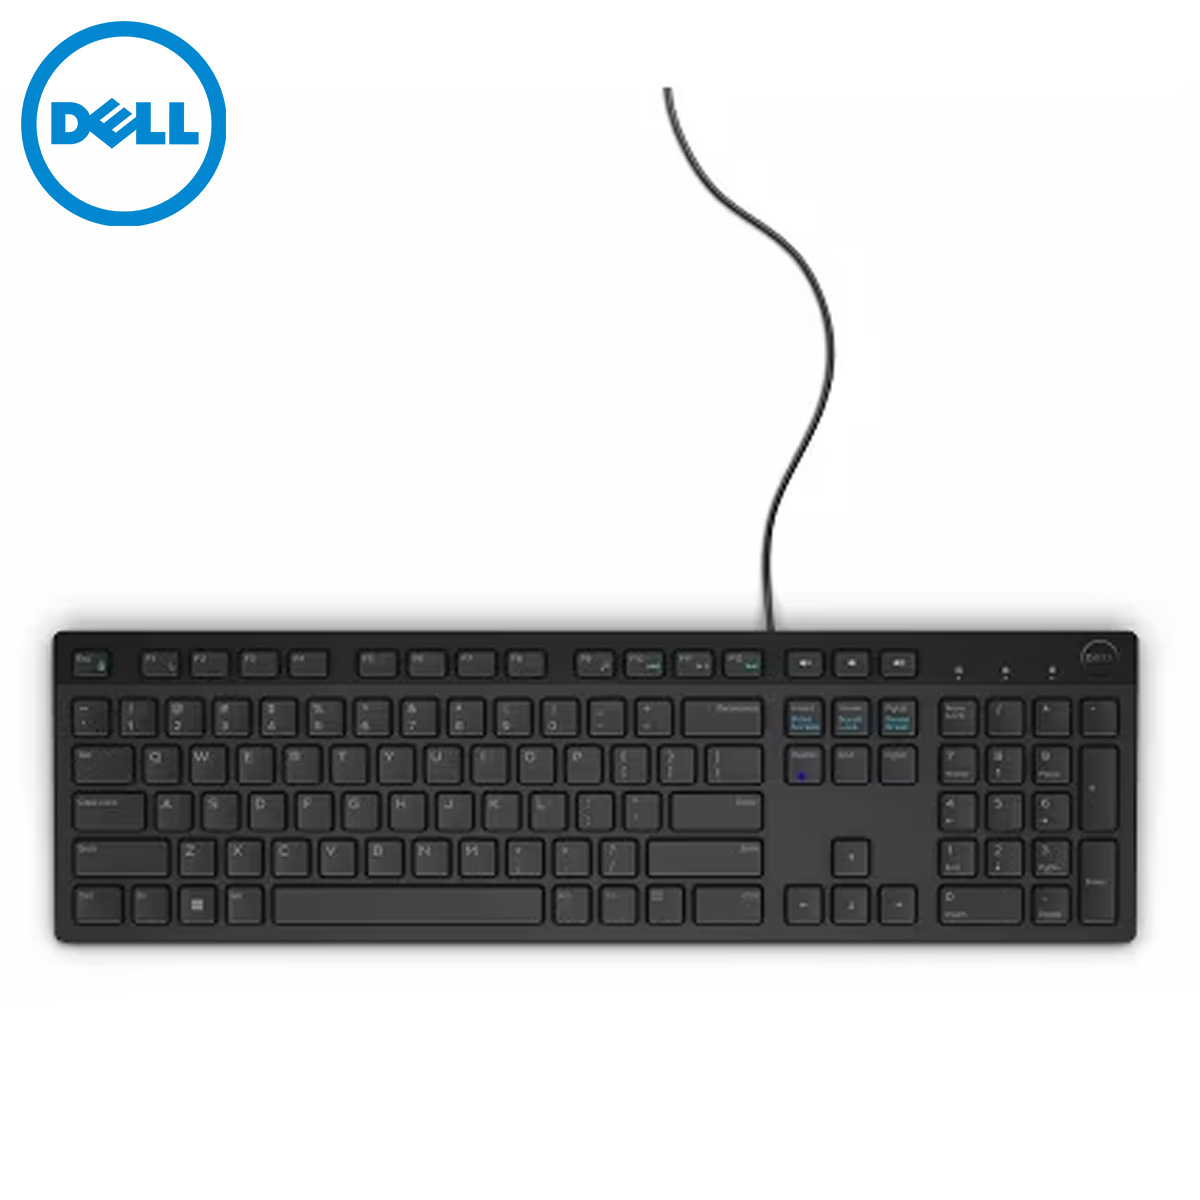 Dell Wired Keyboard - Black KB216 MULTIMEDIA (580-ADMT) -USB